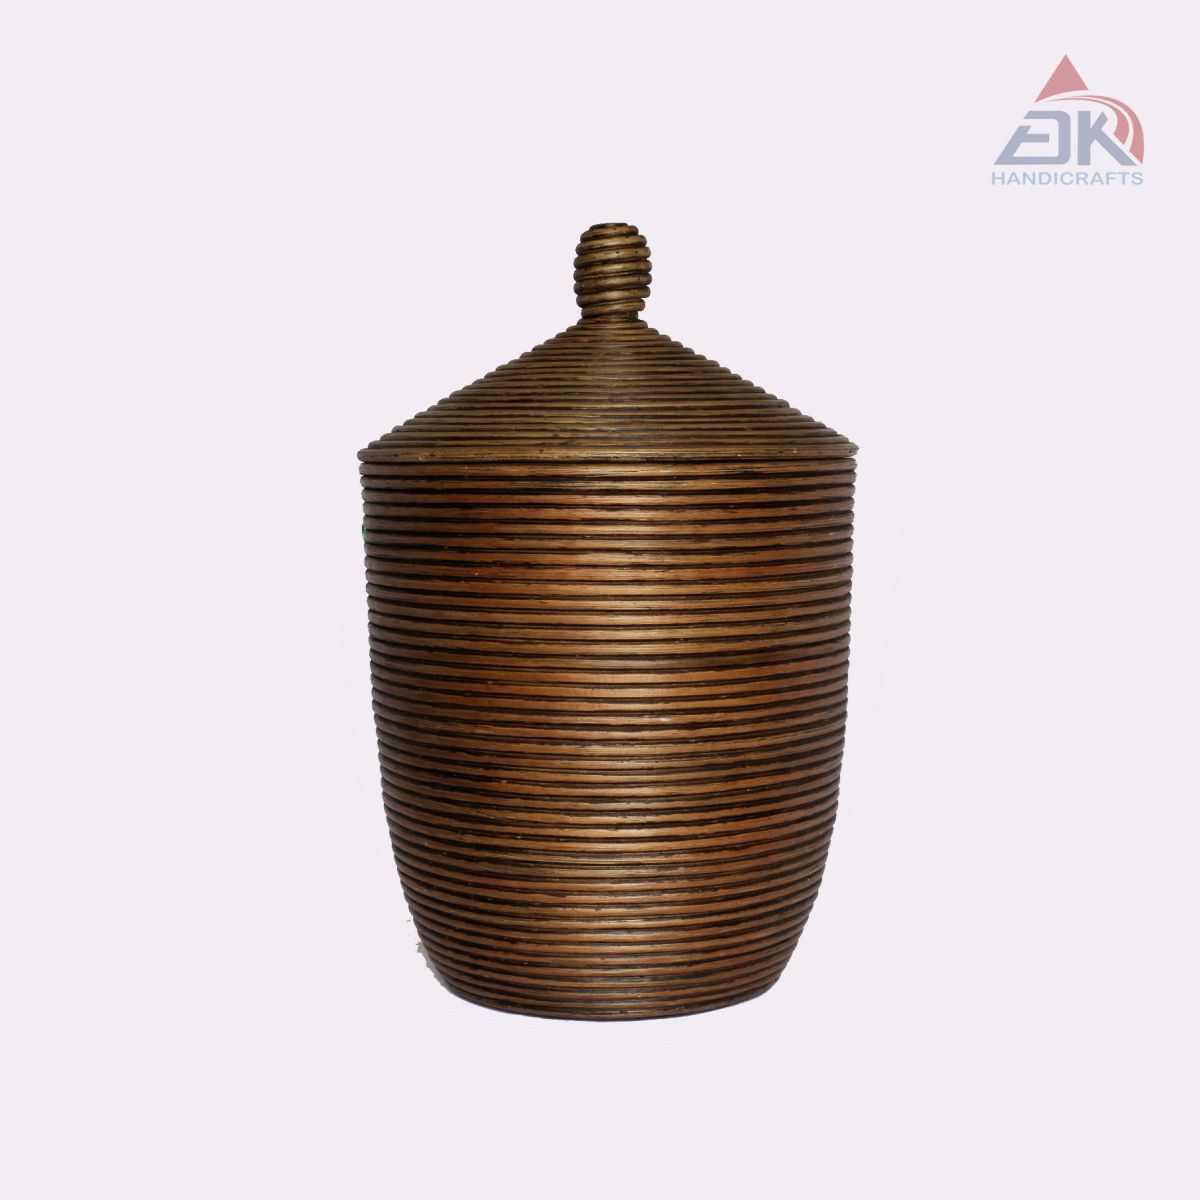 Rattan Coiled Basket # DK50